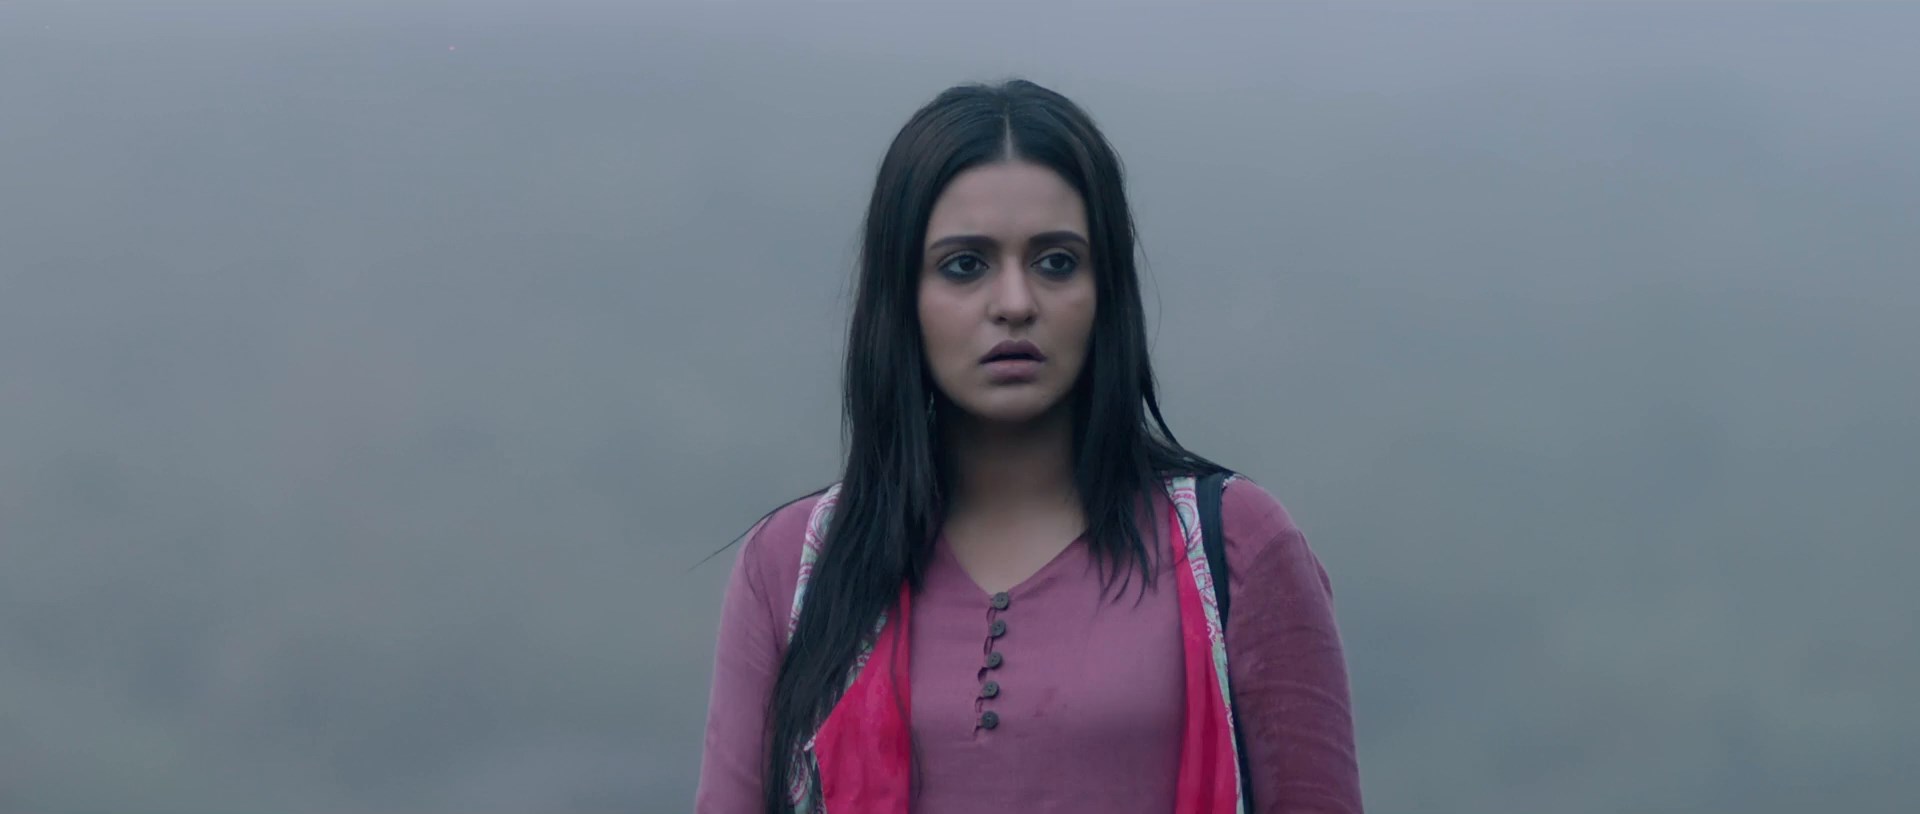 KAYA The Mystery Unfolds 2021 Bengali Movie 1080p WEB DL x264 AAC.mp4 snapshot 01.55.37.791